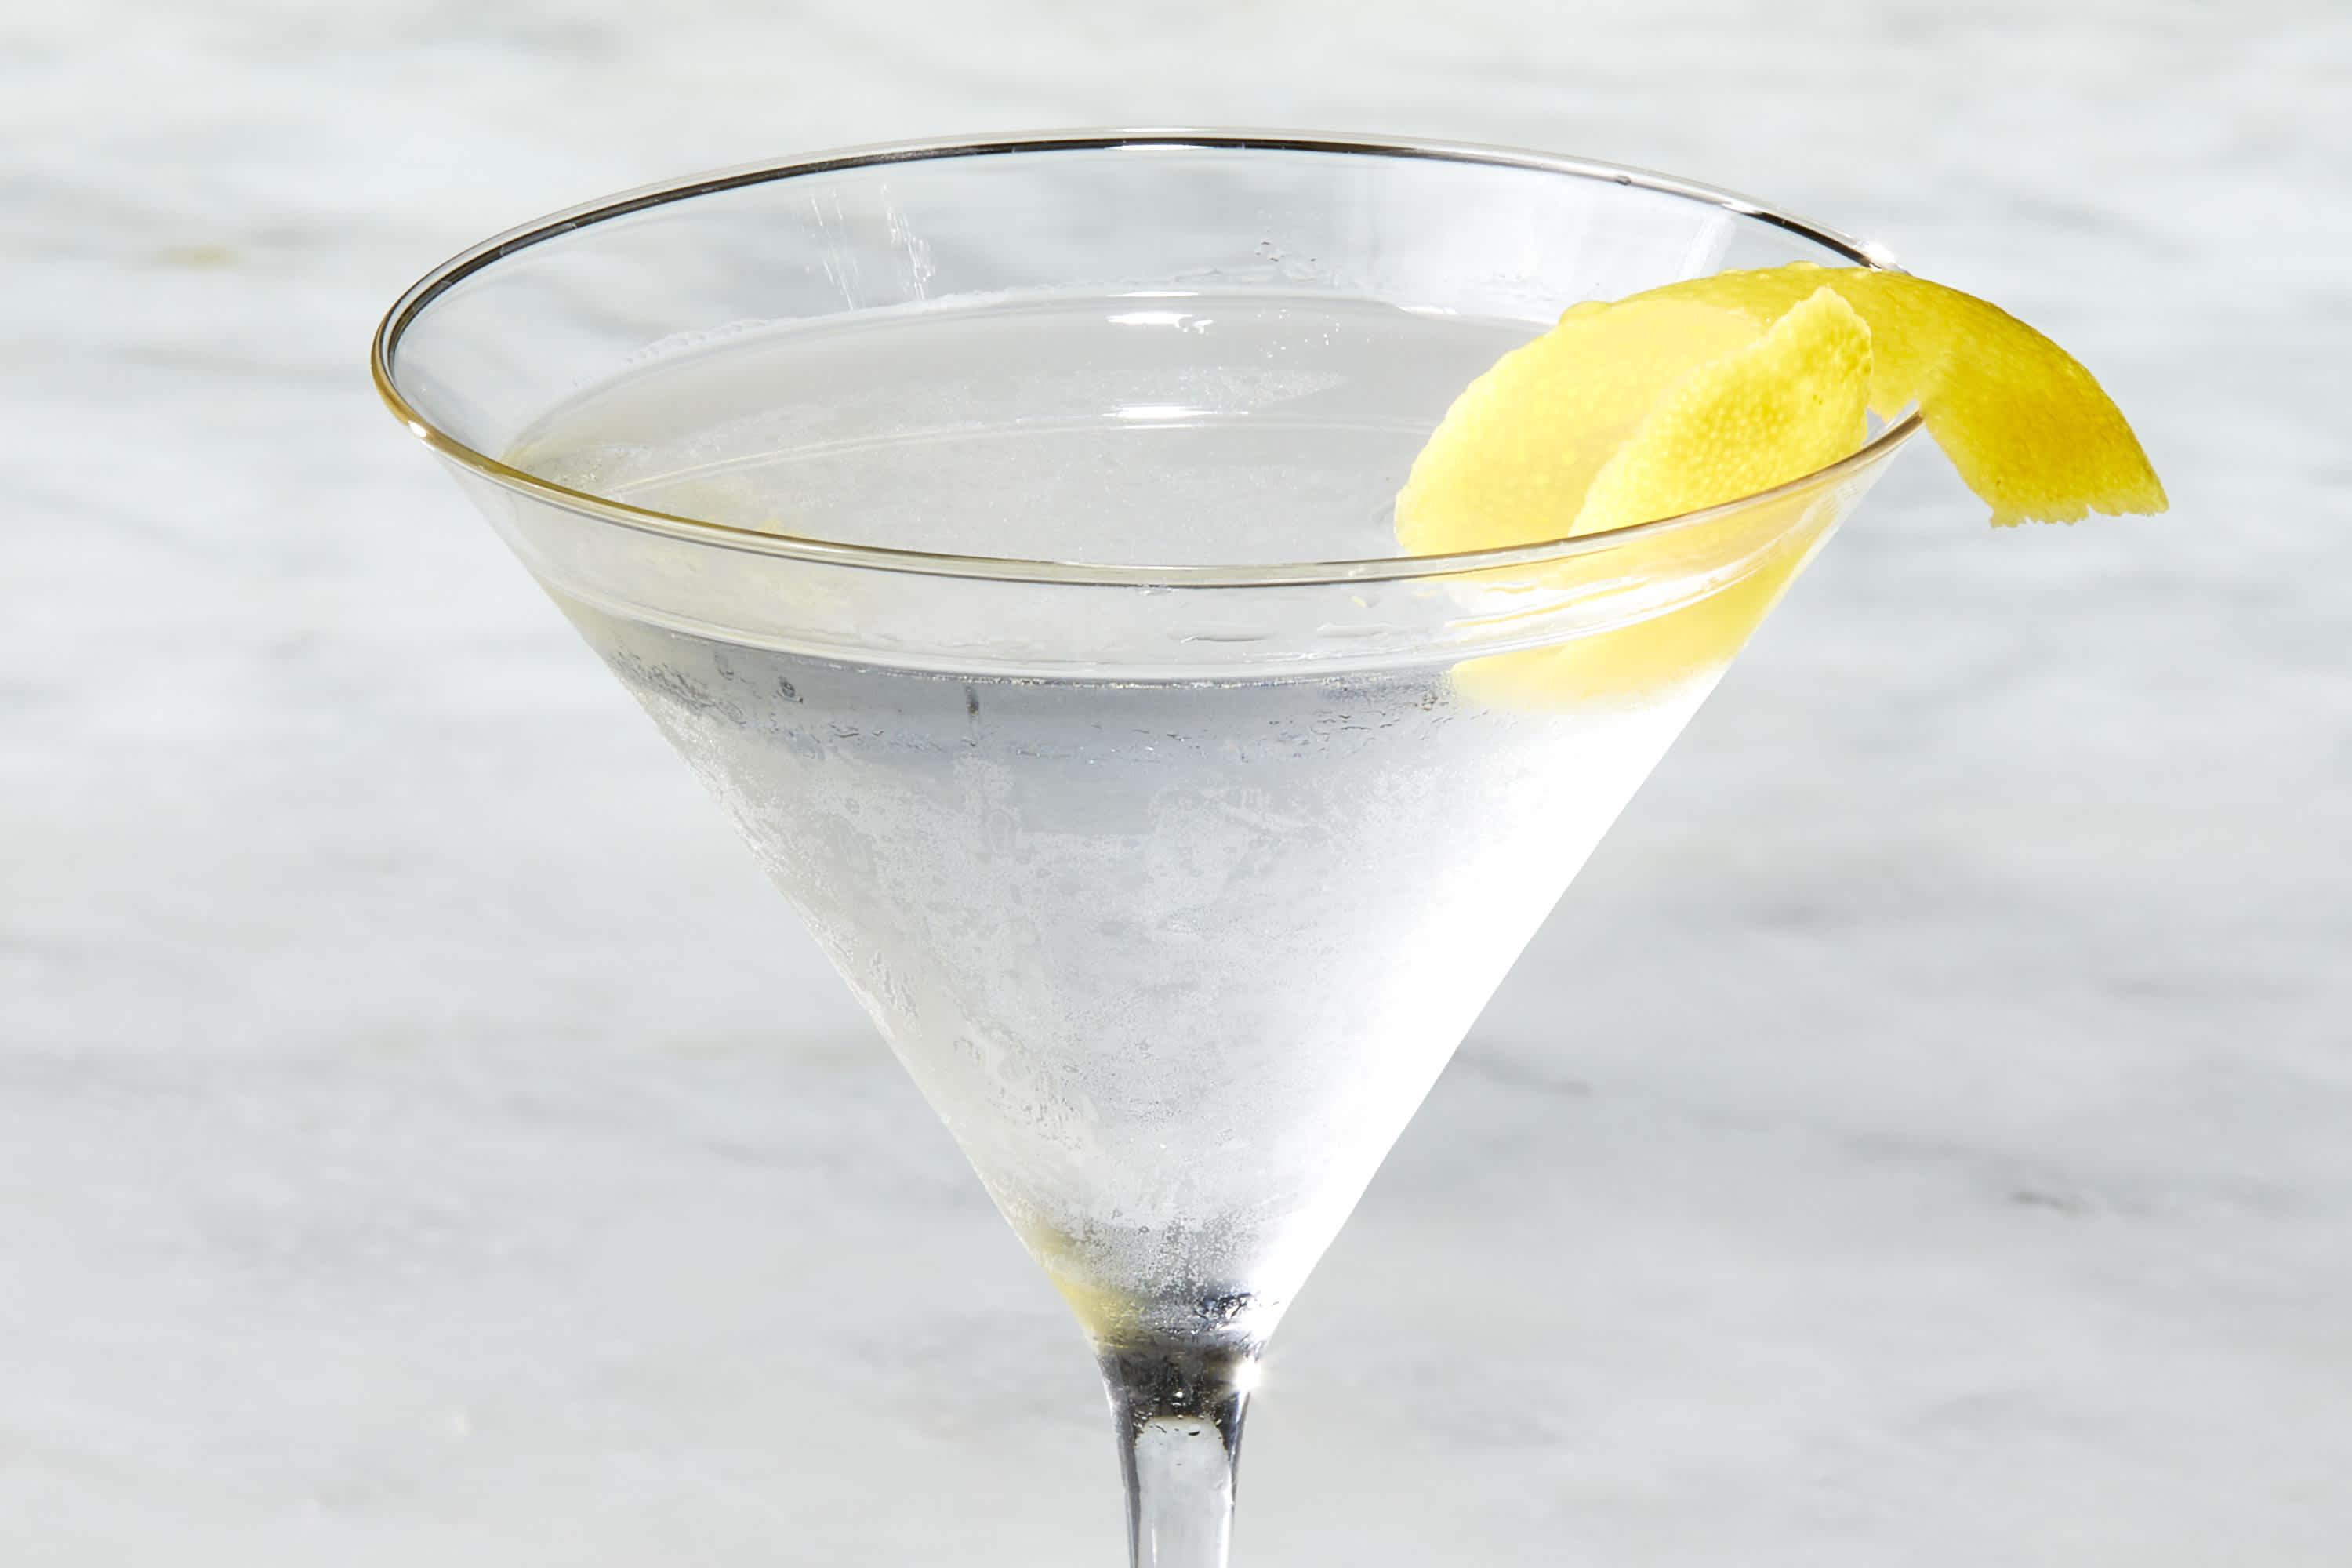 Classic Dry Martini Recipe